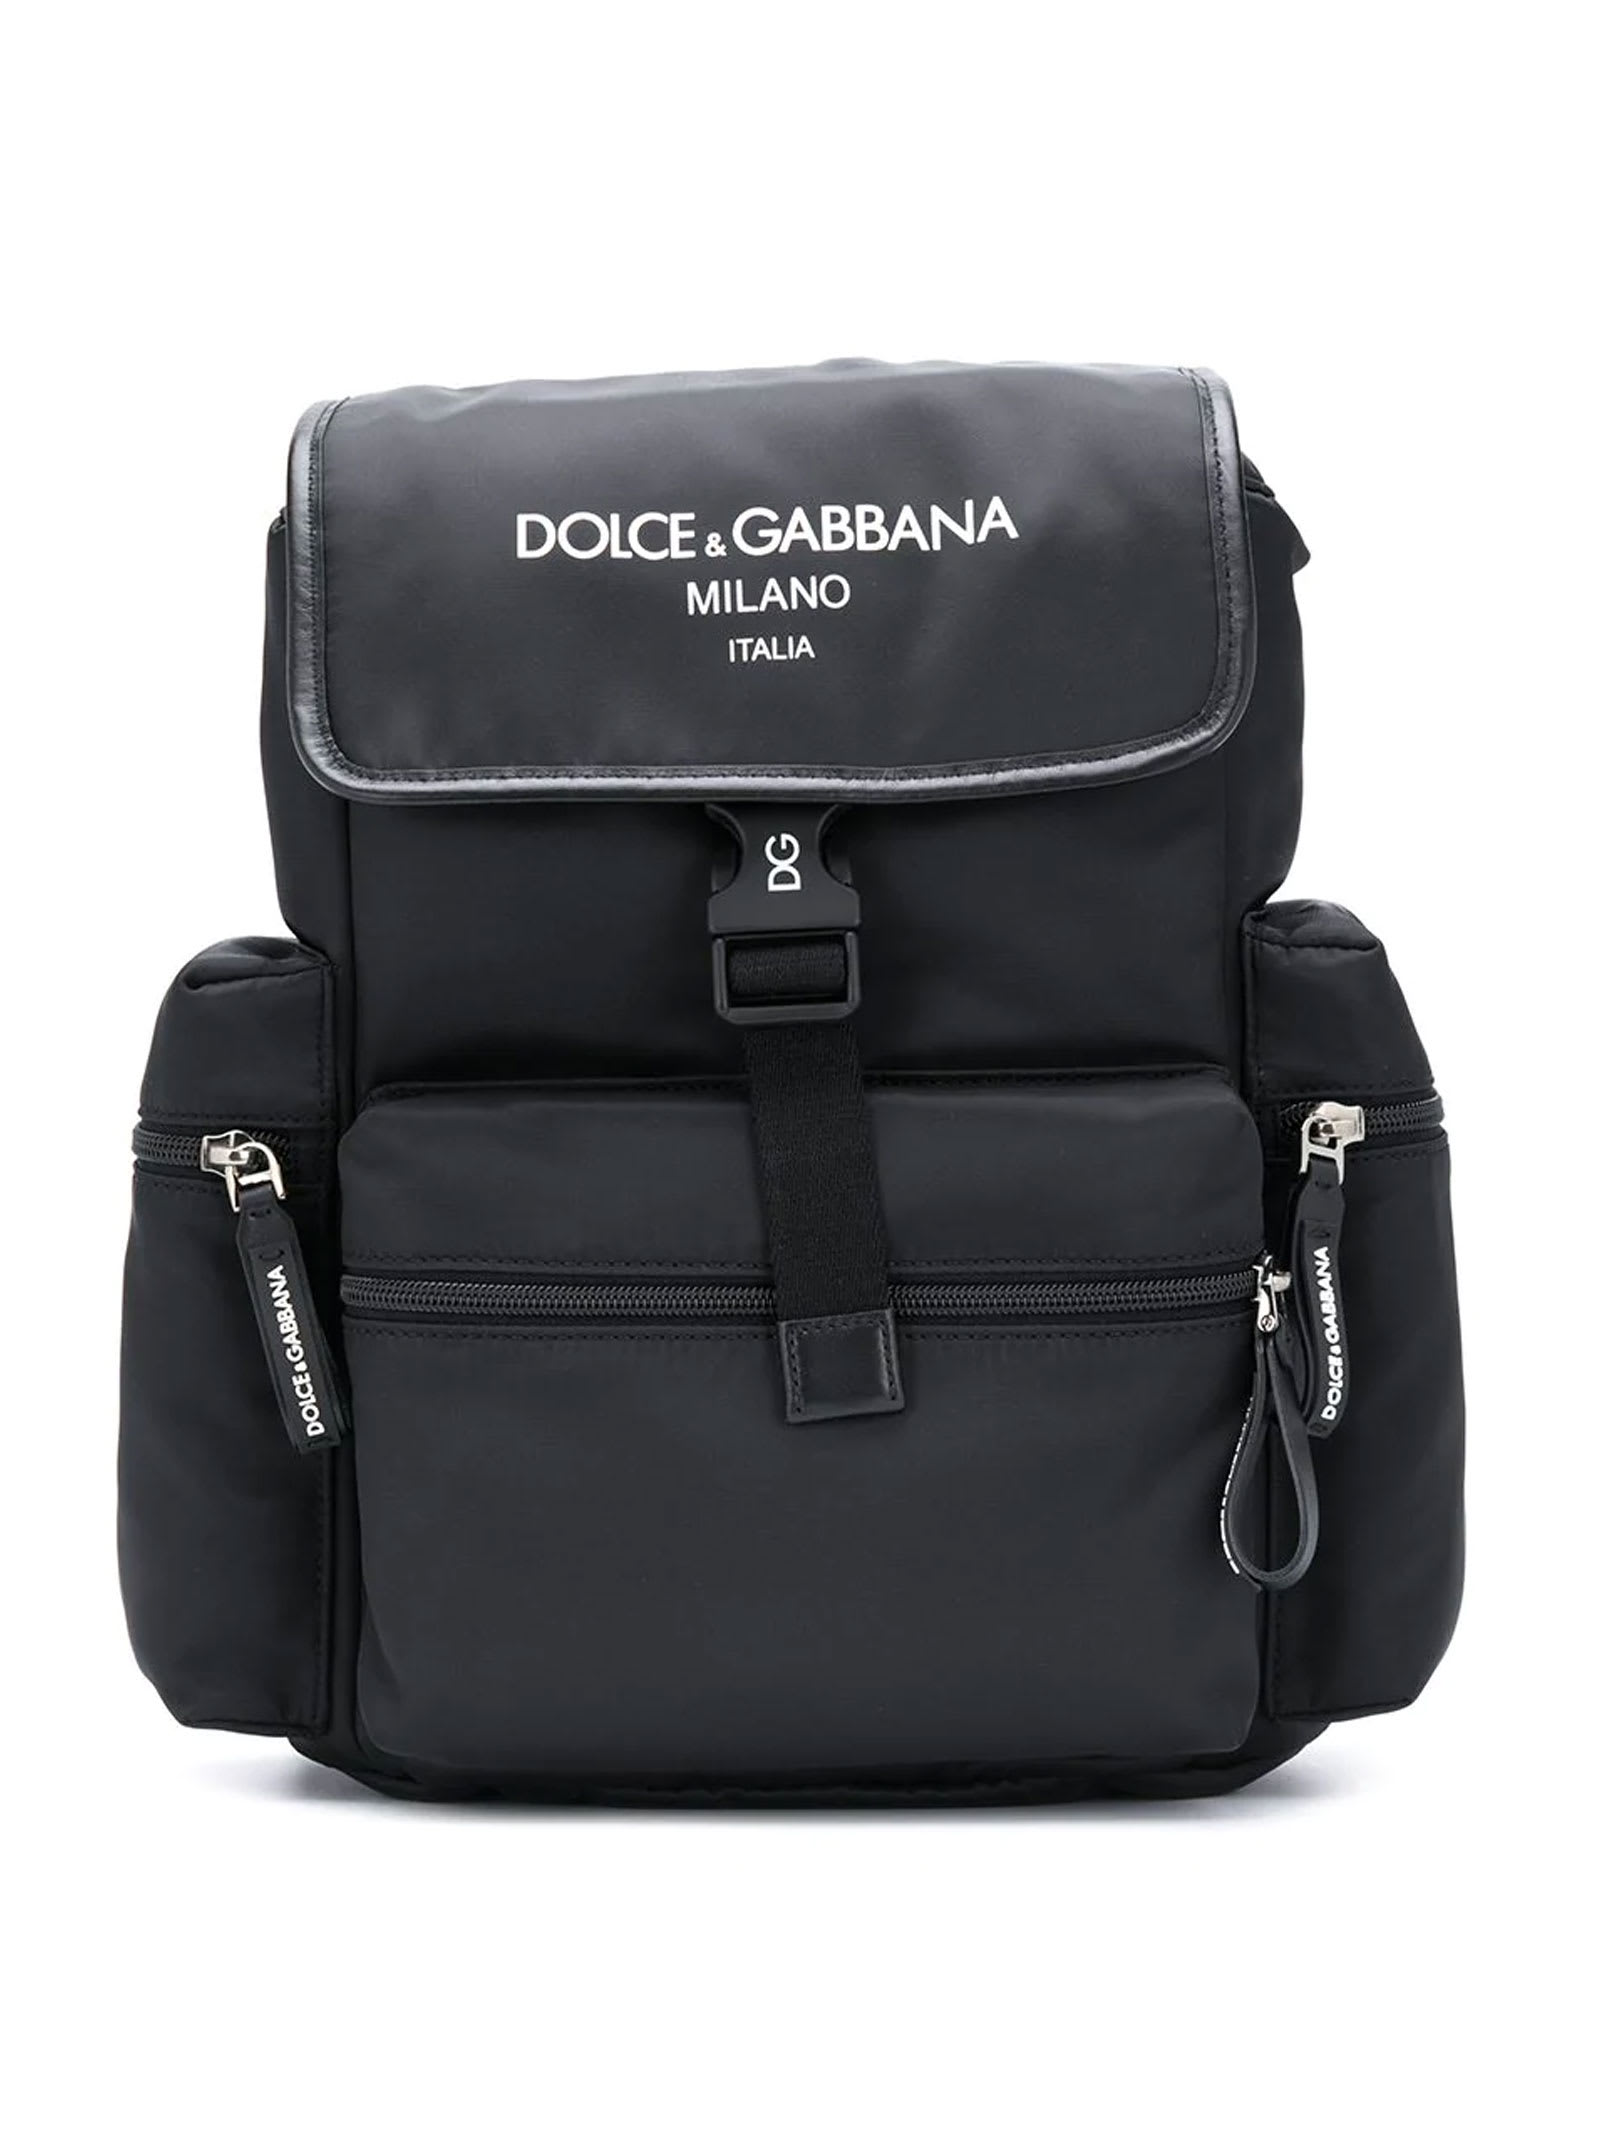 Dolce & Gabbana Black Backpack With Side Pockets And White Logo Dolce & gabbana Kids